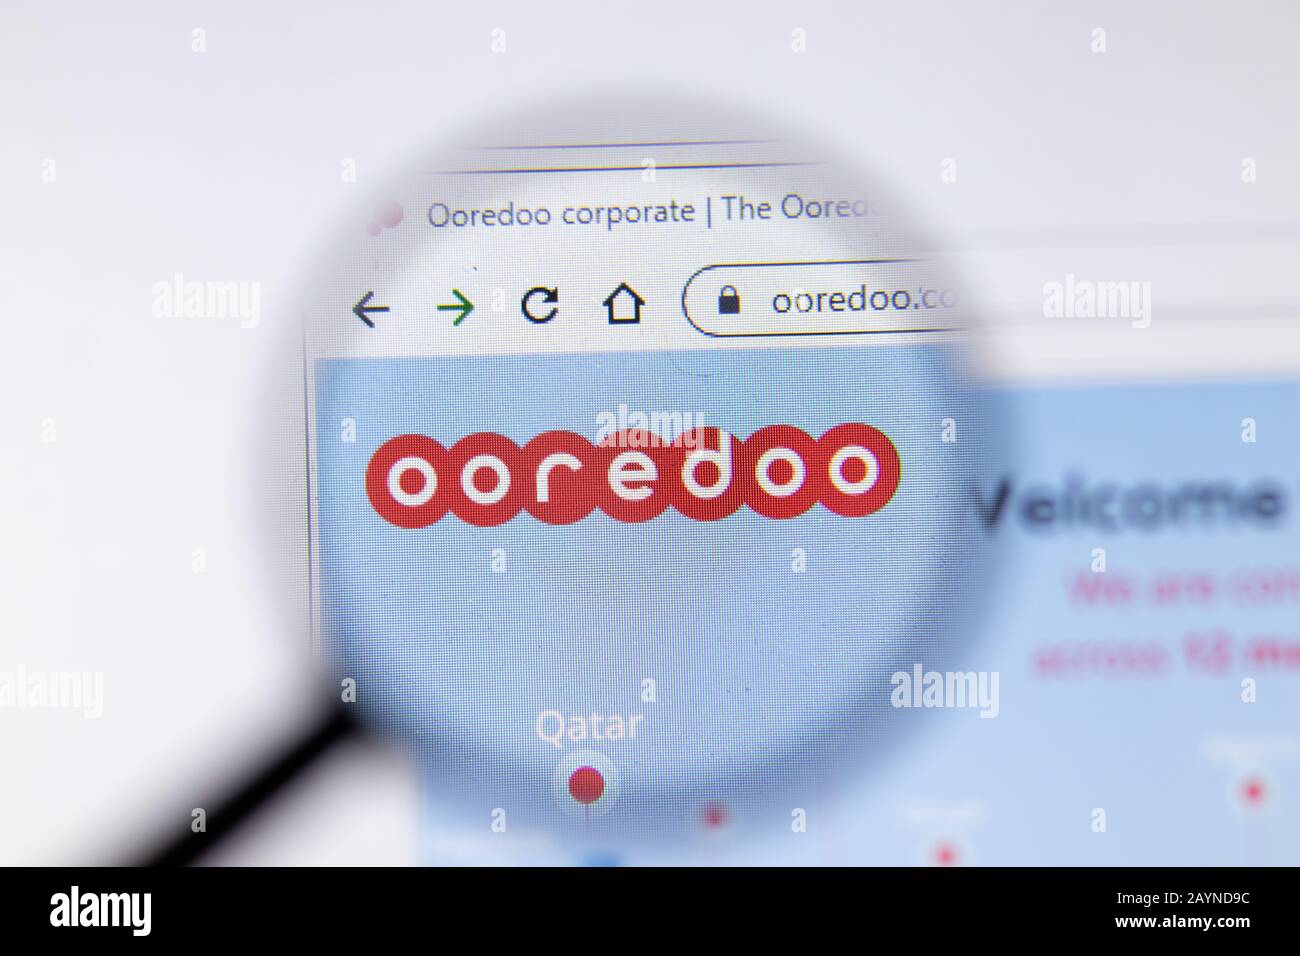 File:Ooredoo logo 2017.svg - Wikipedia